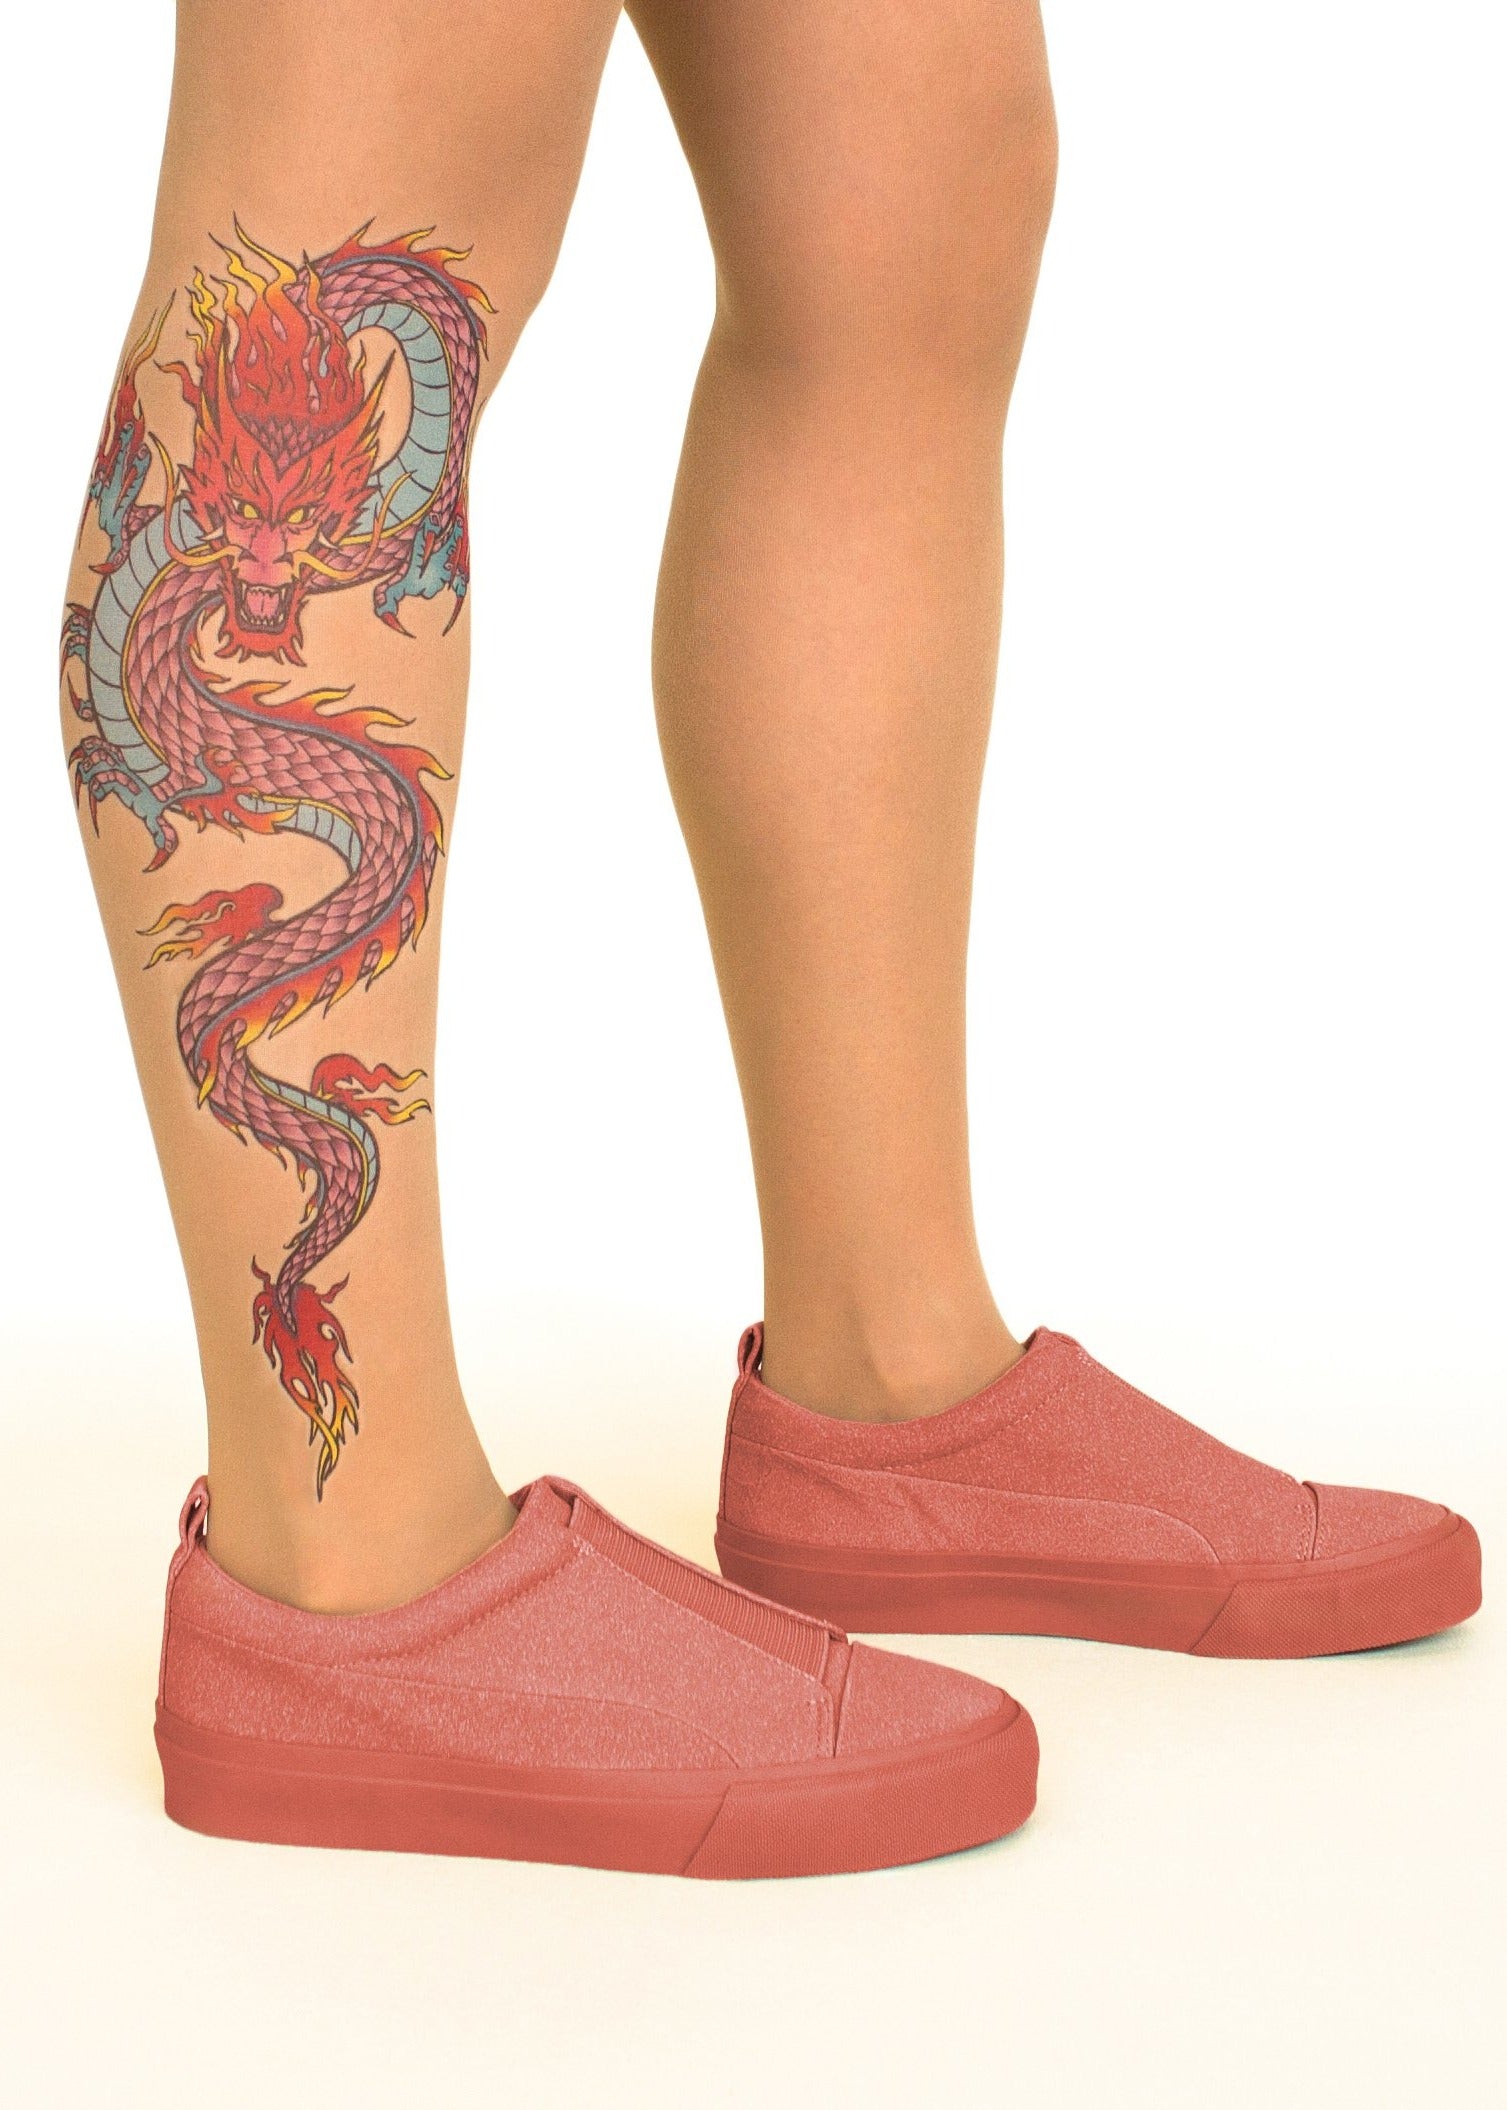 Fire dragon flame holder - tattoo design by AlviaAlcedo on DeviantArt